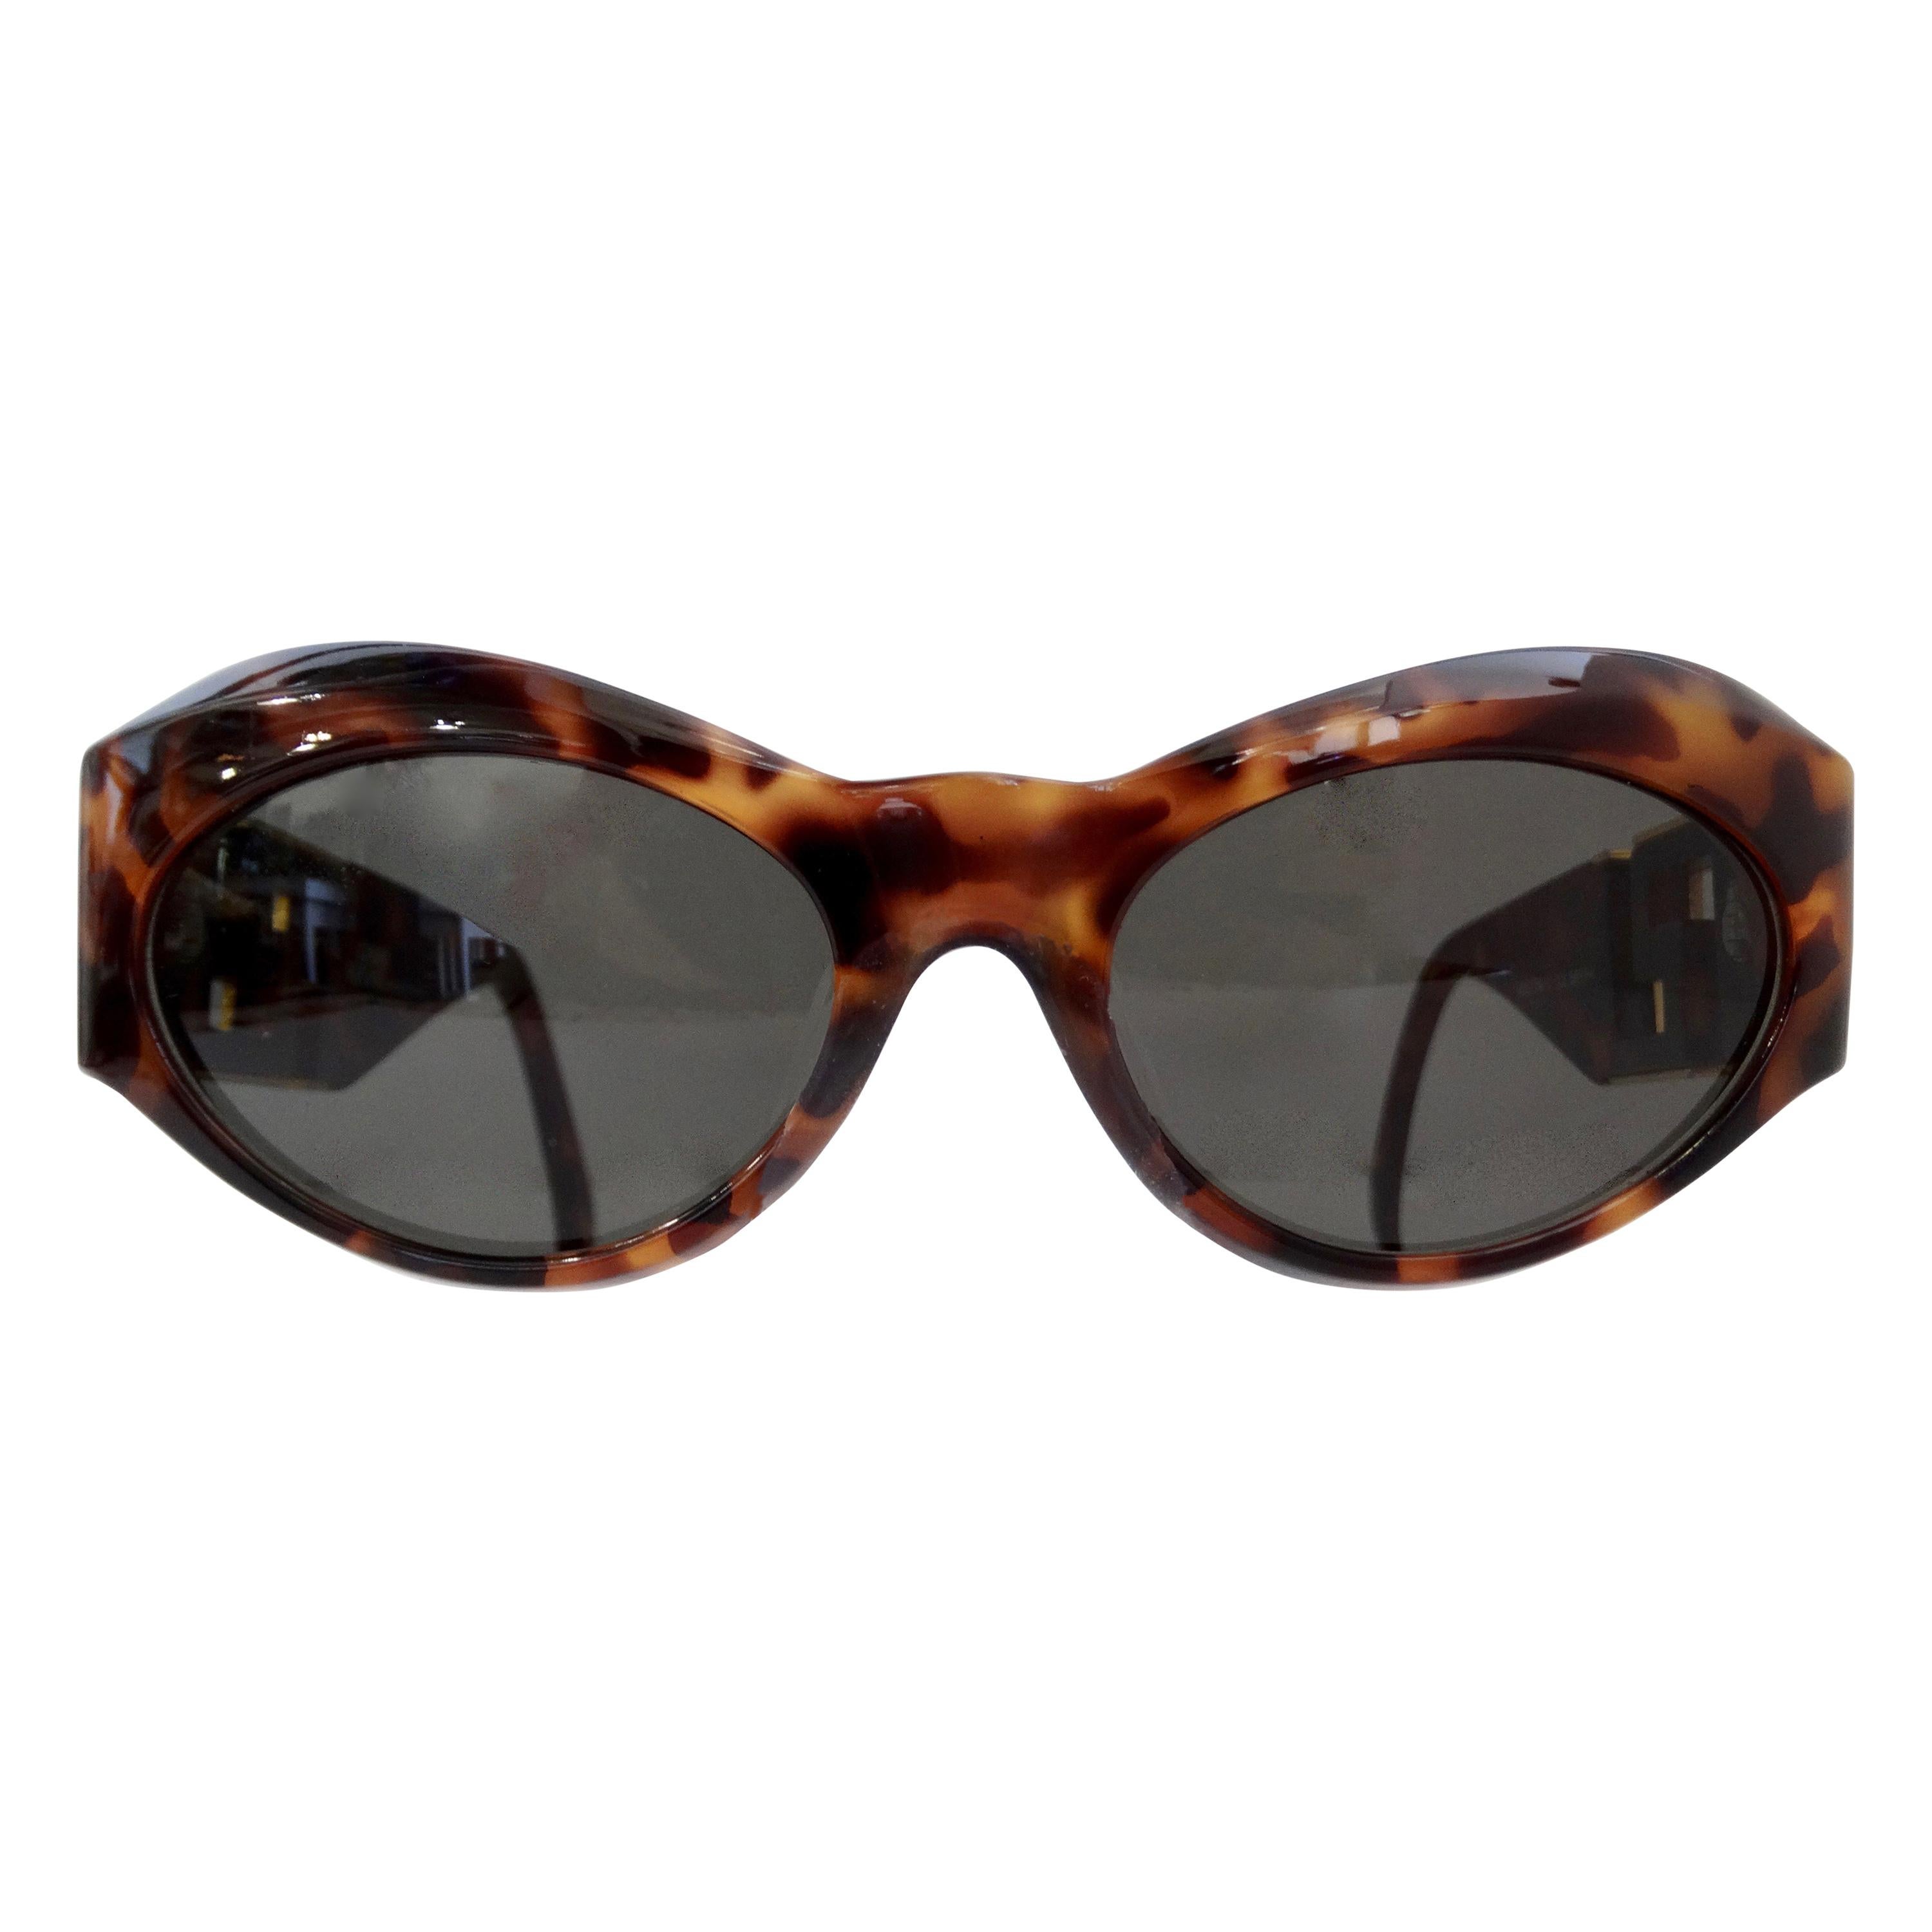 Gianni Versace 1990s Greek Key Tortoise Sunglasses 